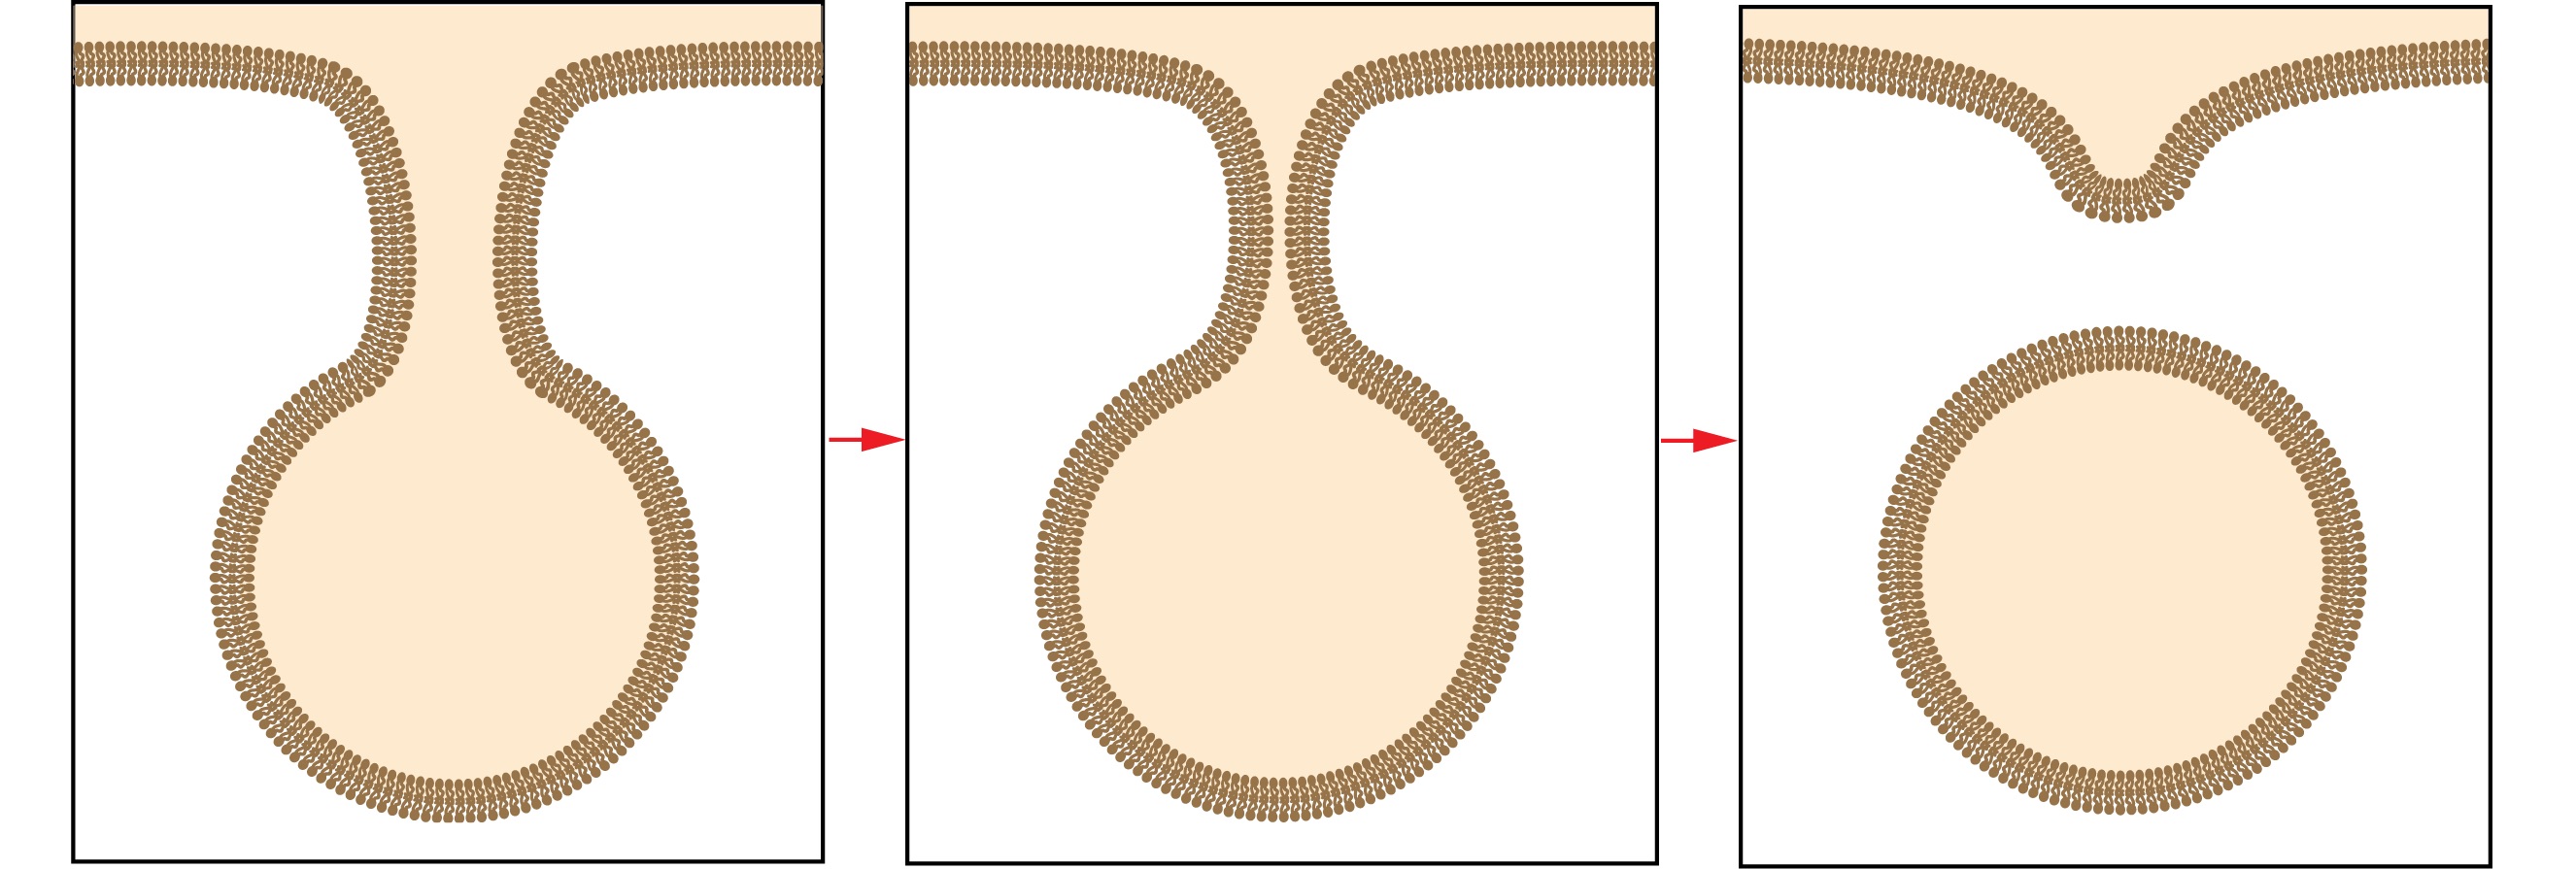 membrane pinching model